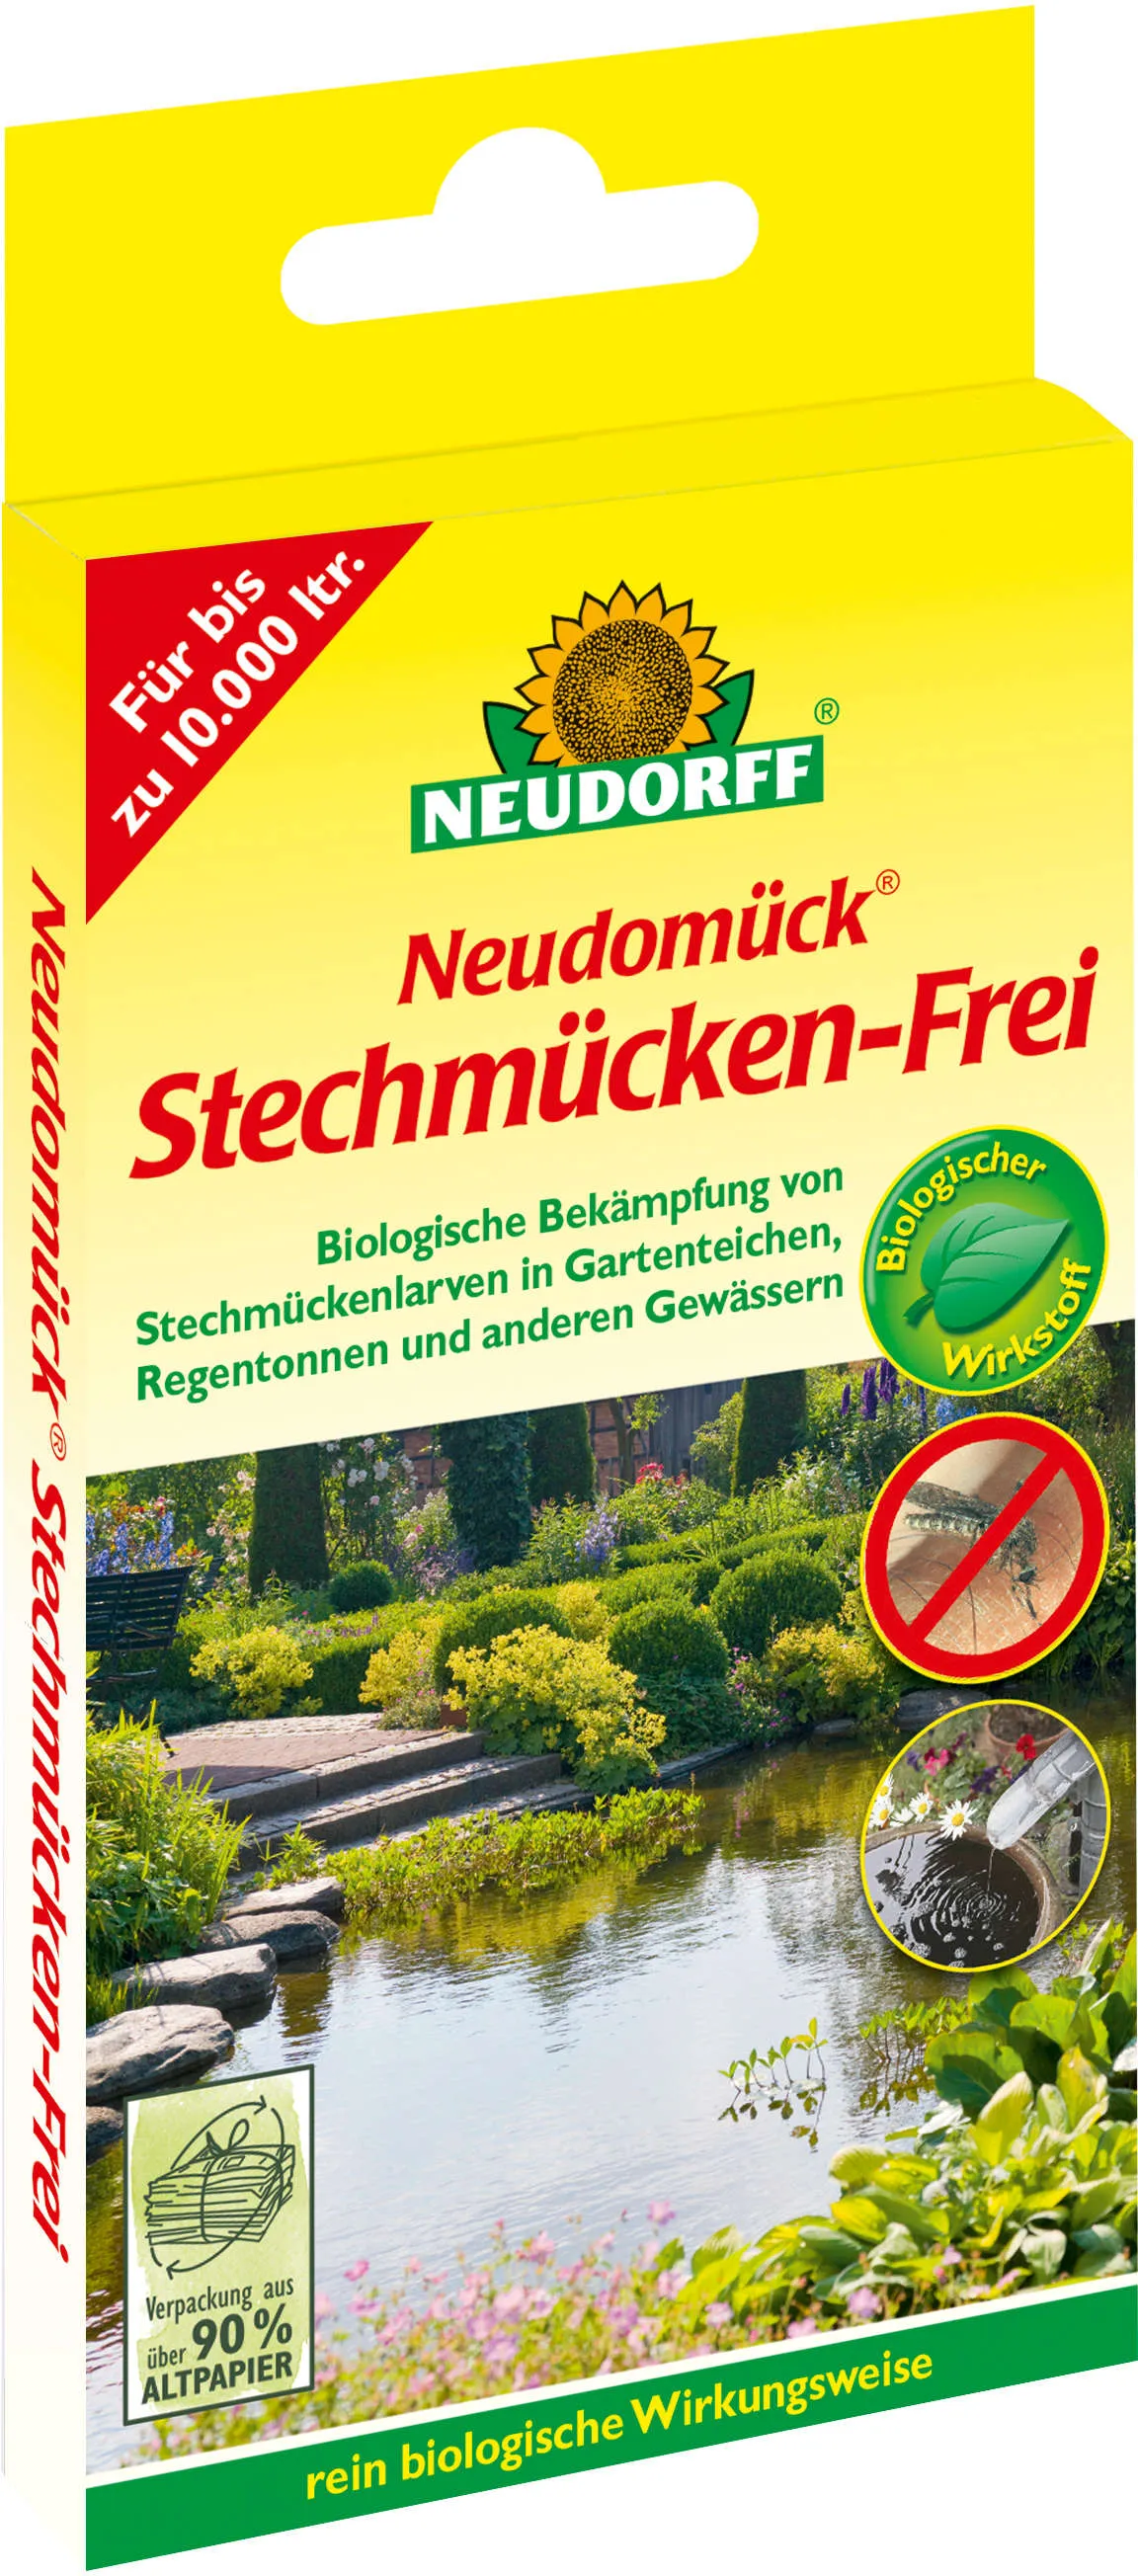 NEUDORFF Neudomück Stechmücken-Frei